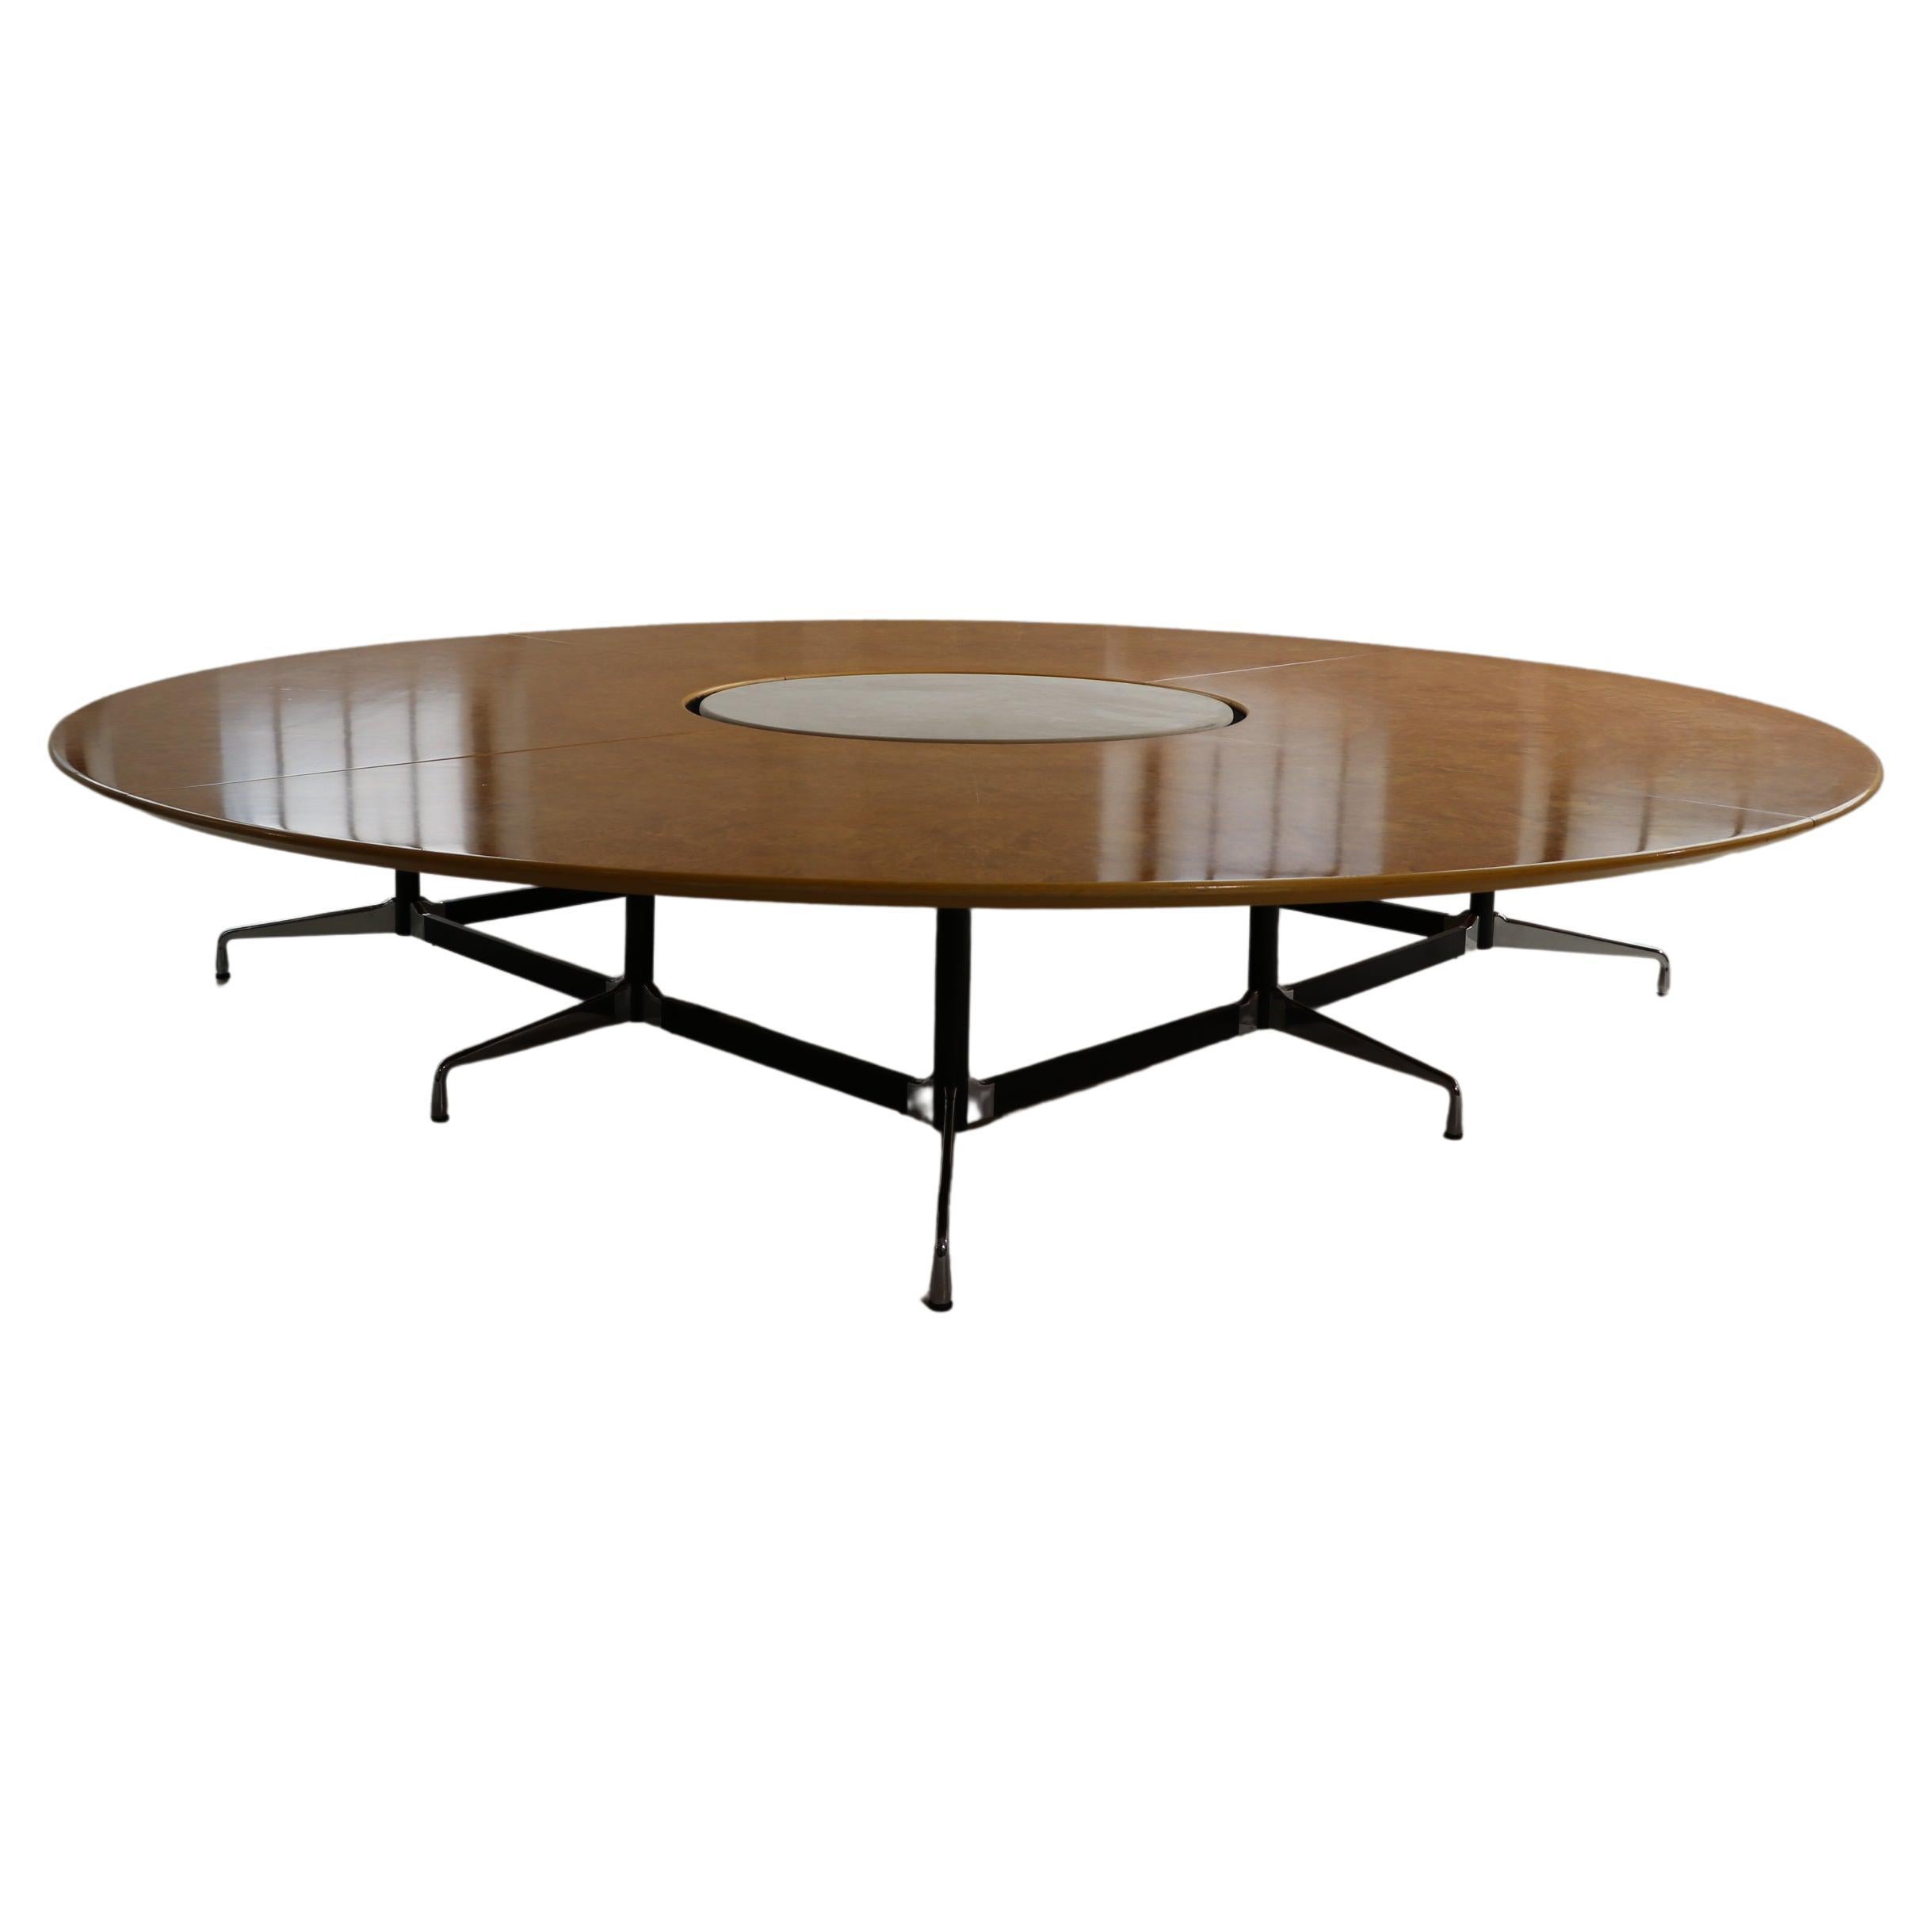 Table de conférence ronde Segmented Table Vitra/Herman Miller de Charles Eames, 400 cm en vente